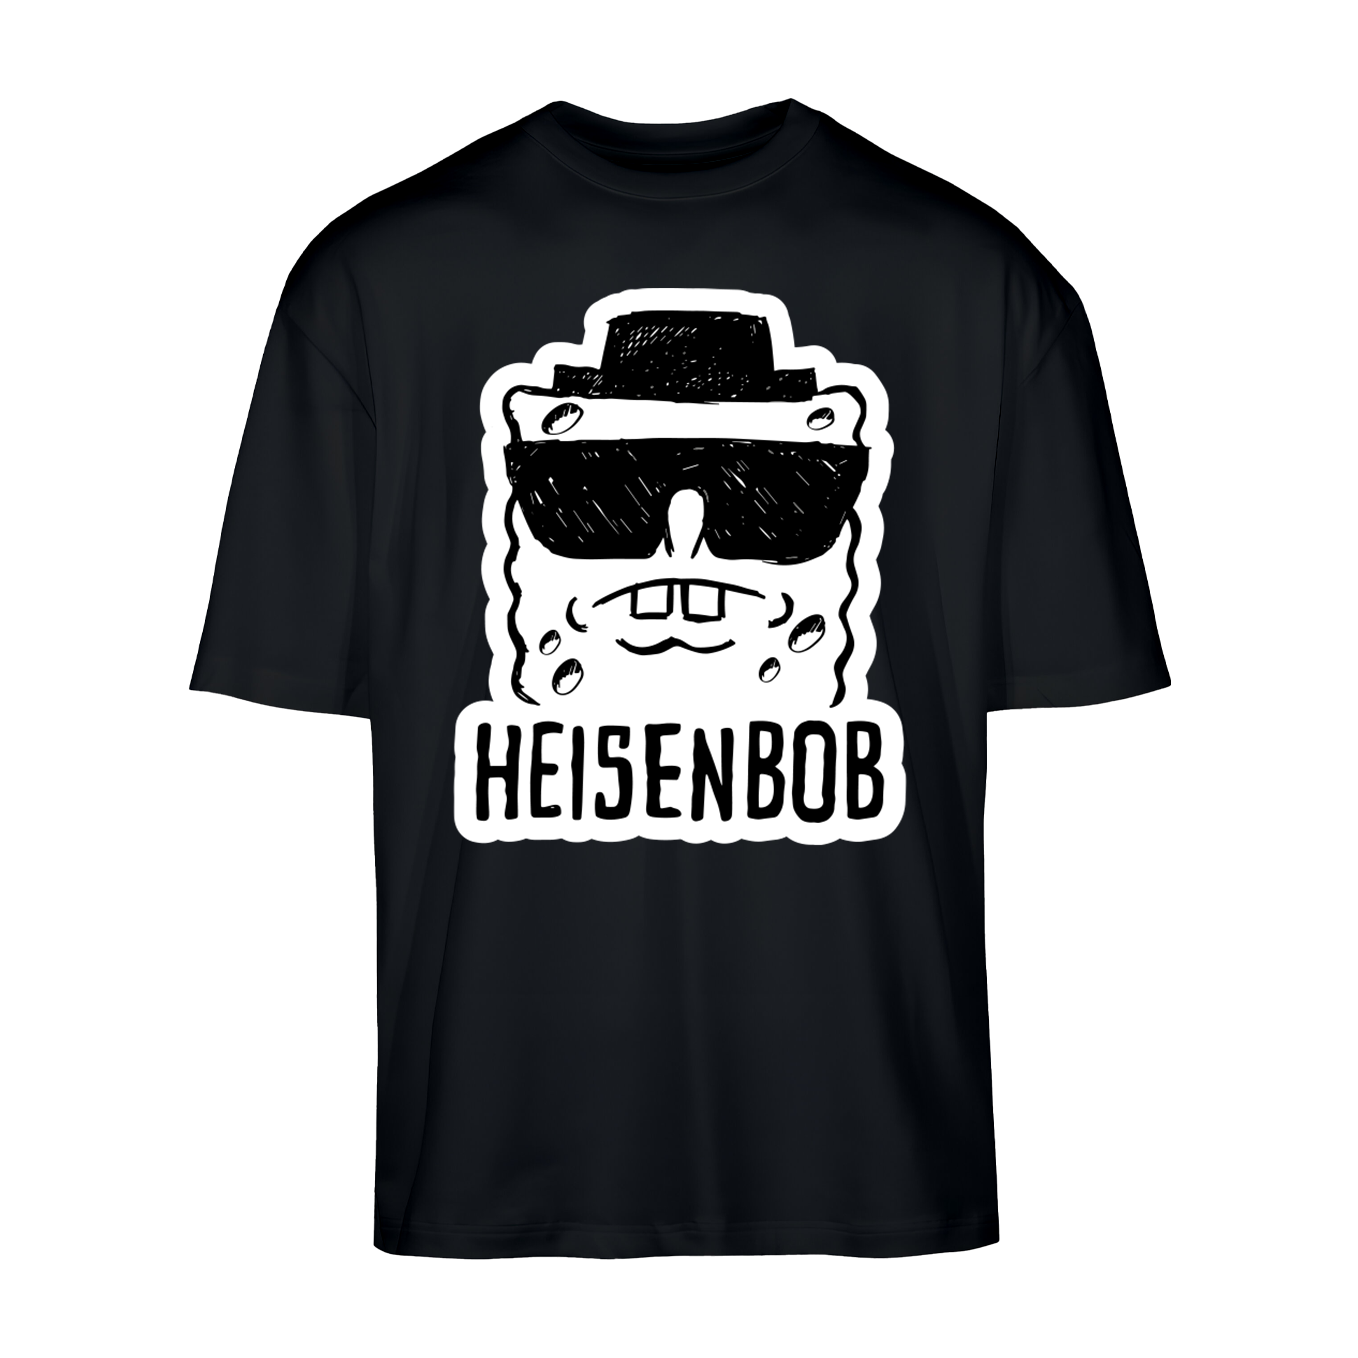 T-shirt "Heisenbob"